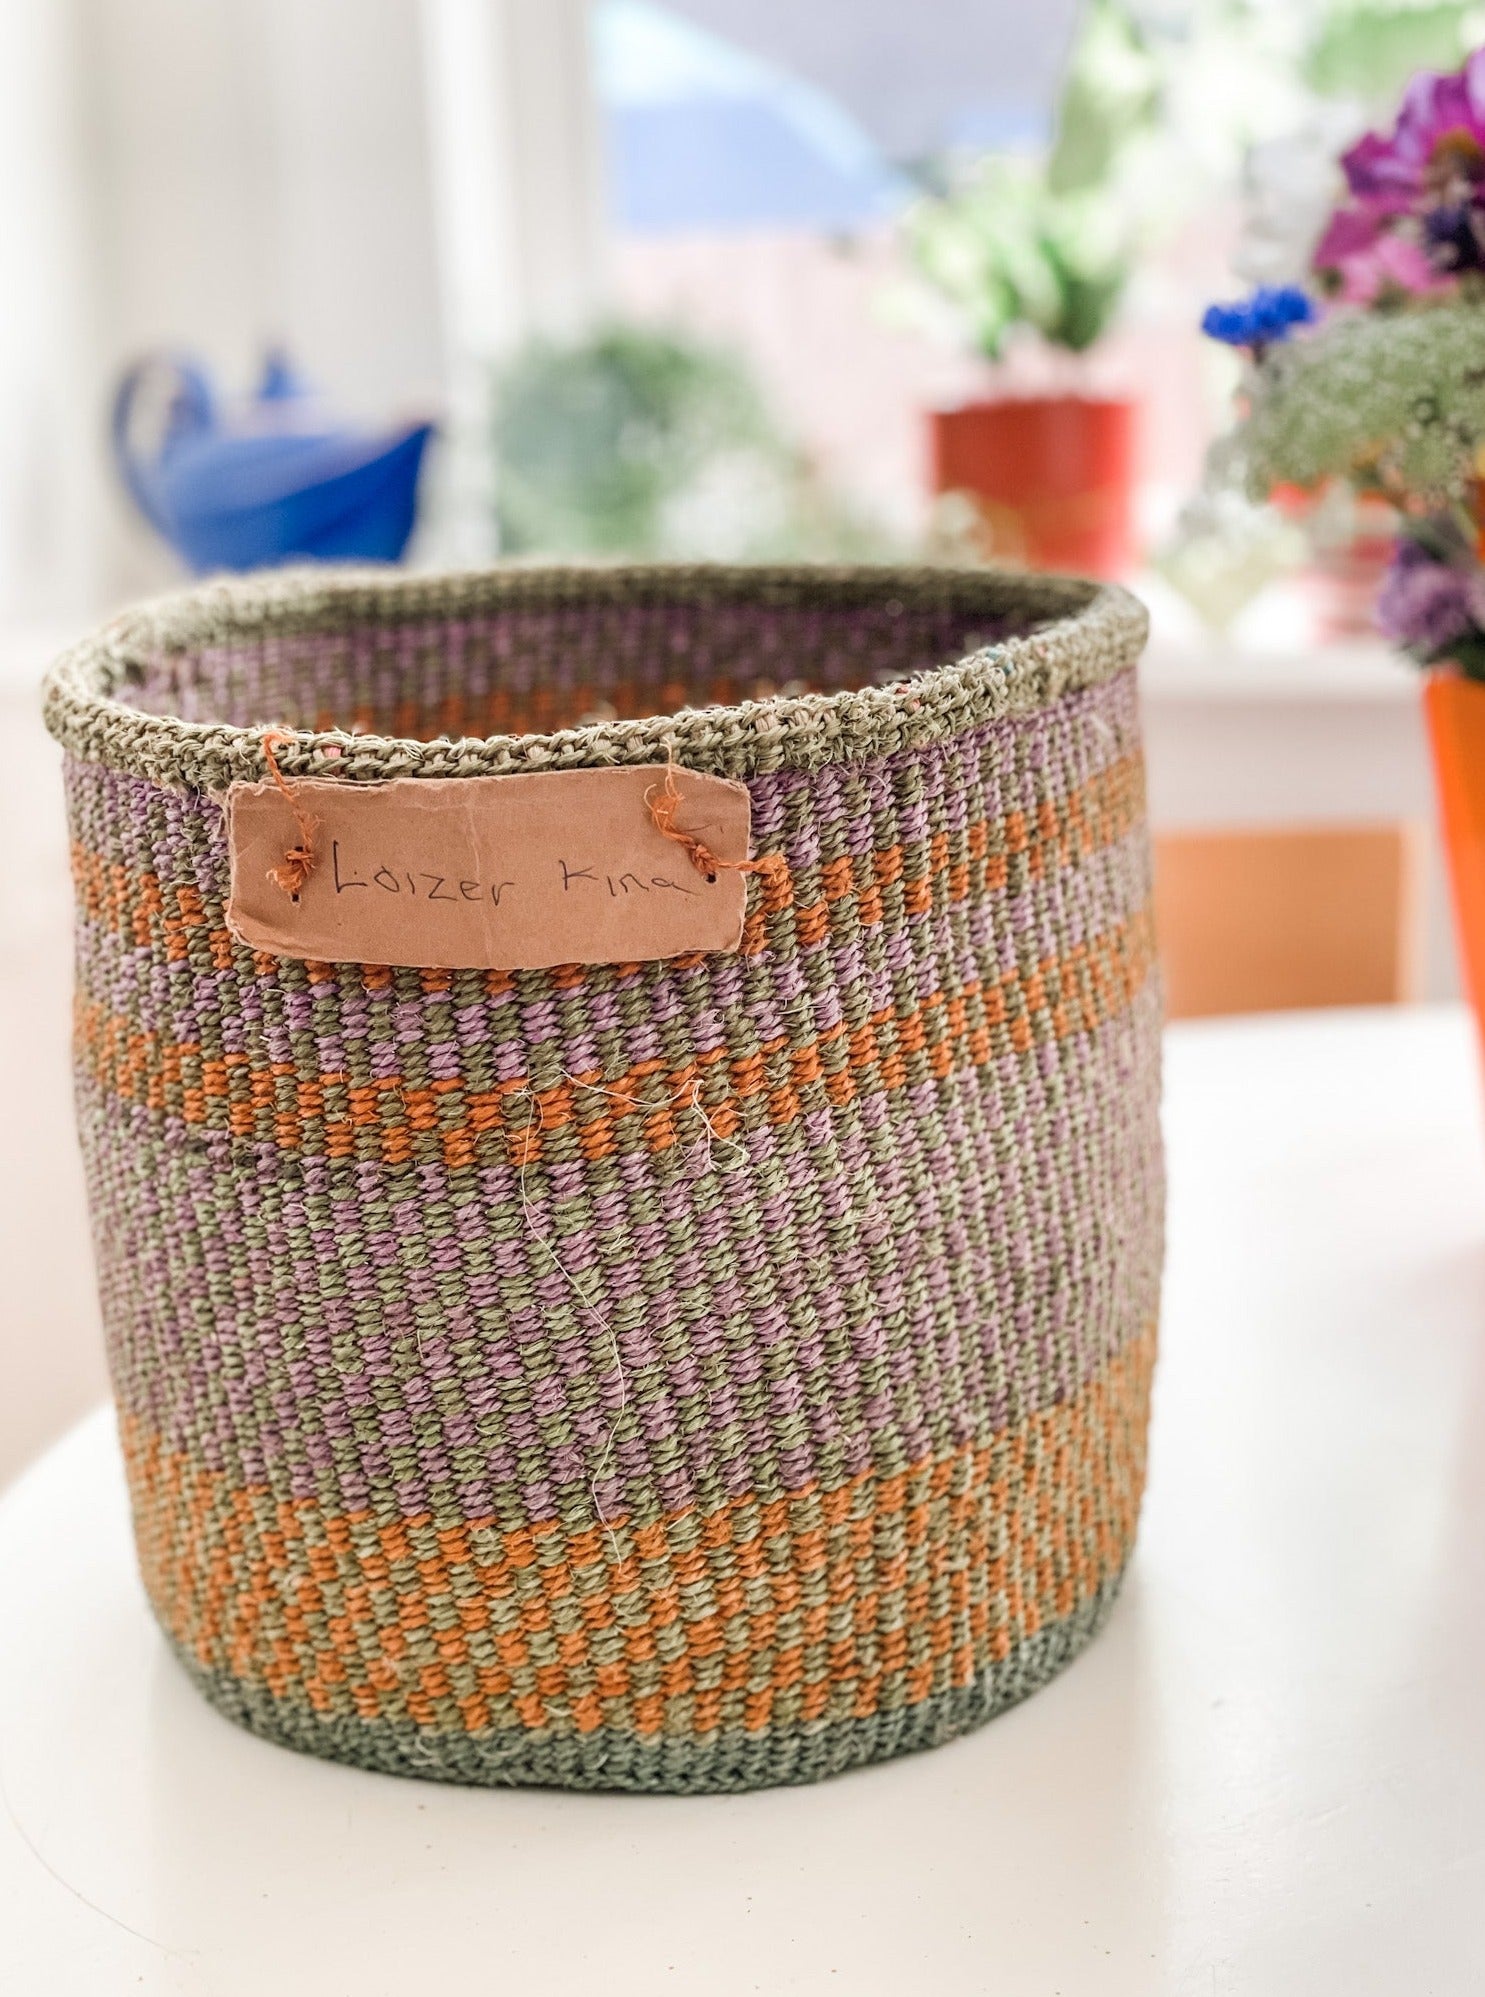 Handmade African baskets, woven baskets for storage